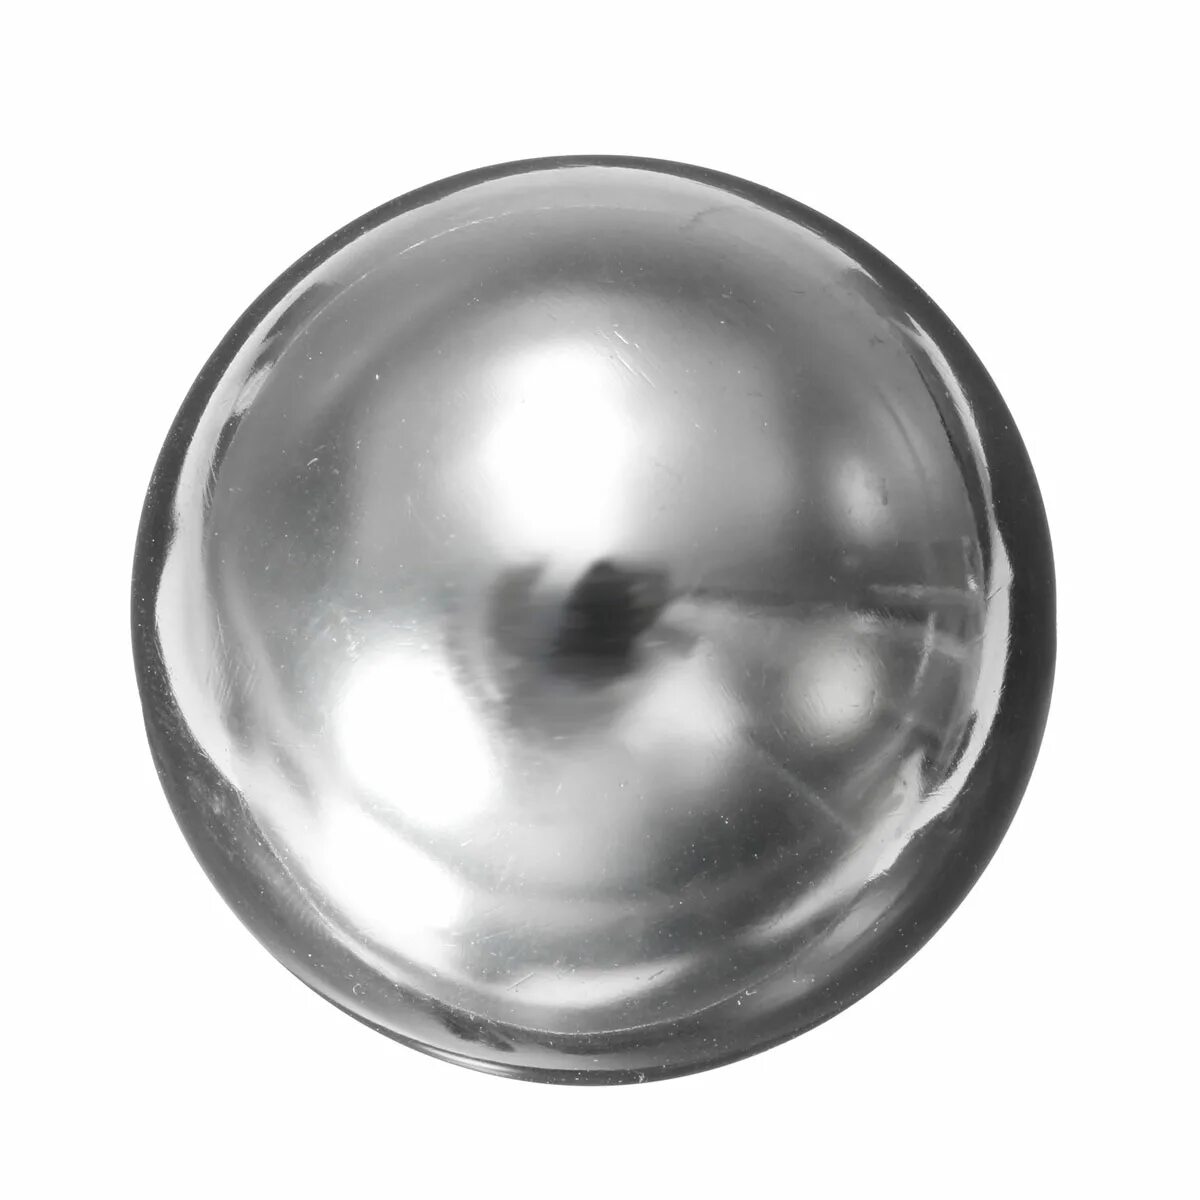 Металлический шар. Хромированный металлический шар. Металлическая сфера. Стальной шарик.